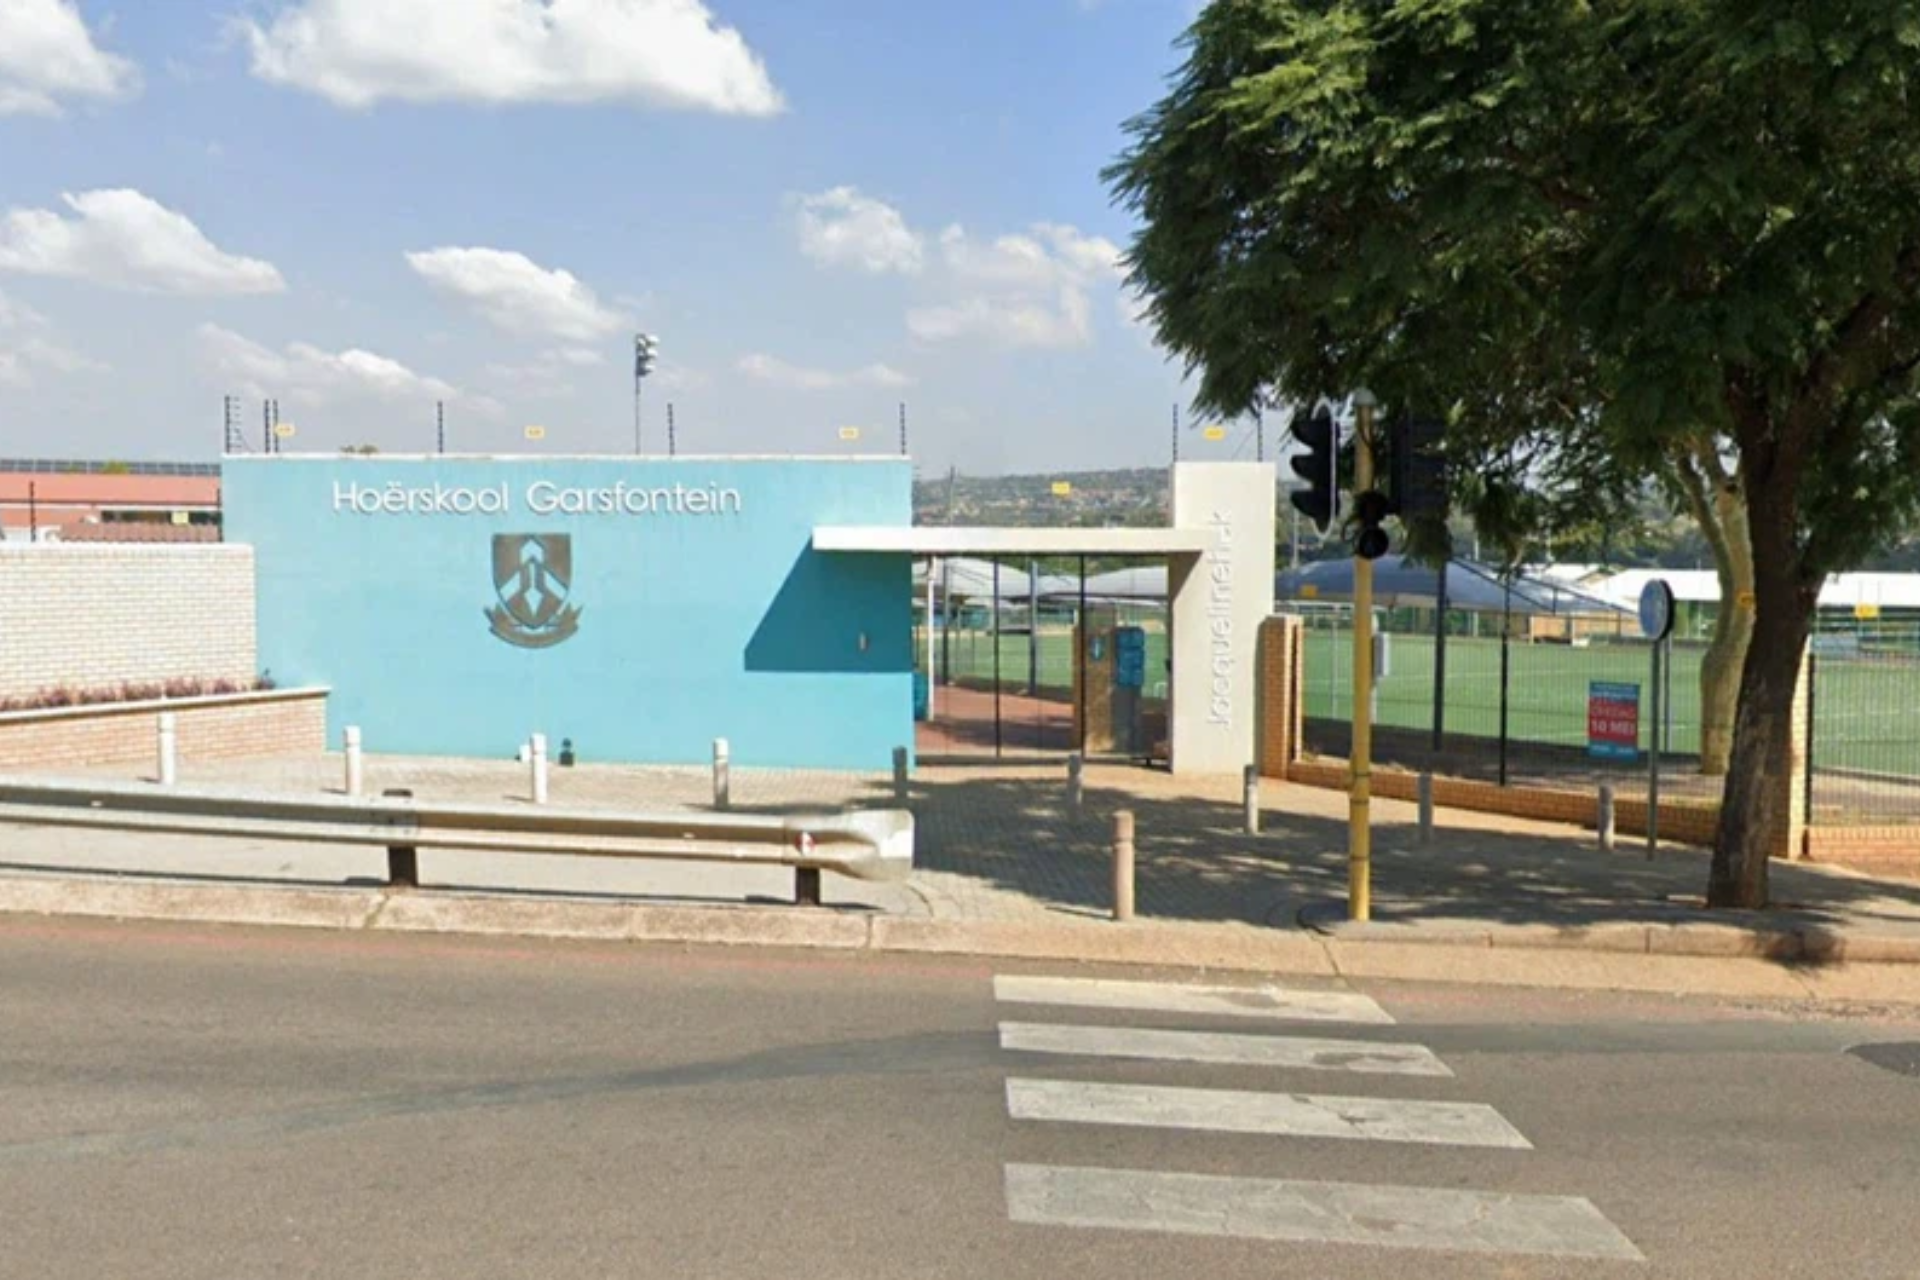 Hoërskool Garsfontein learner